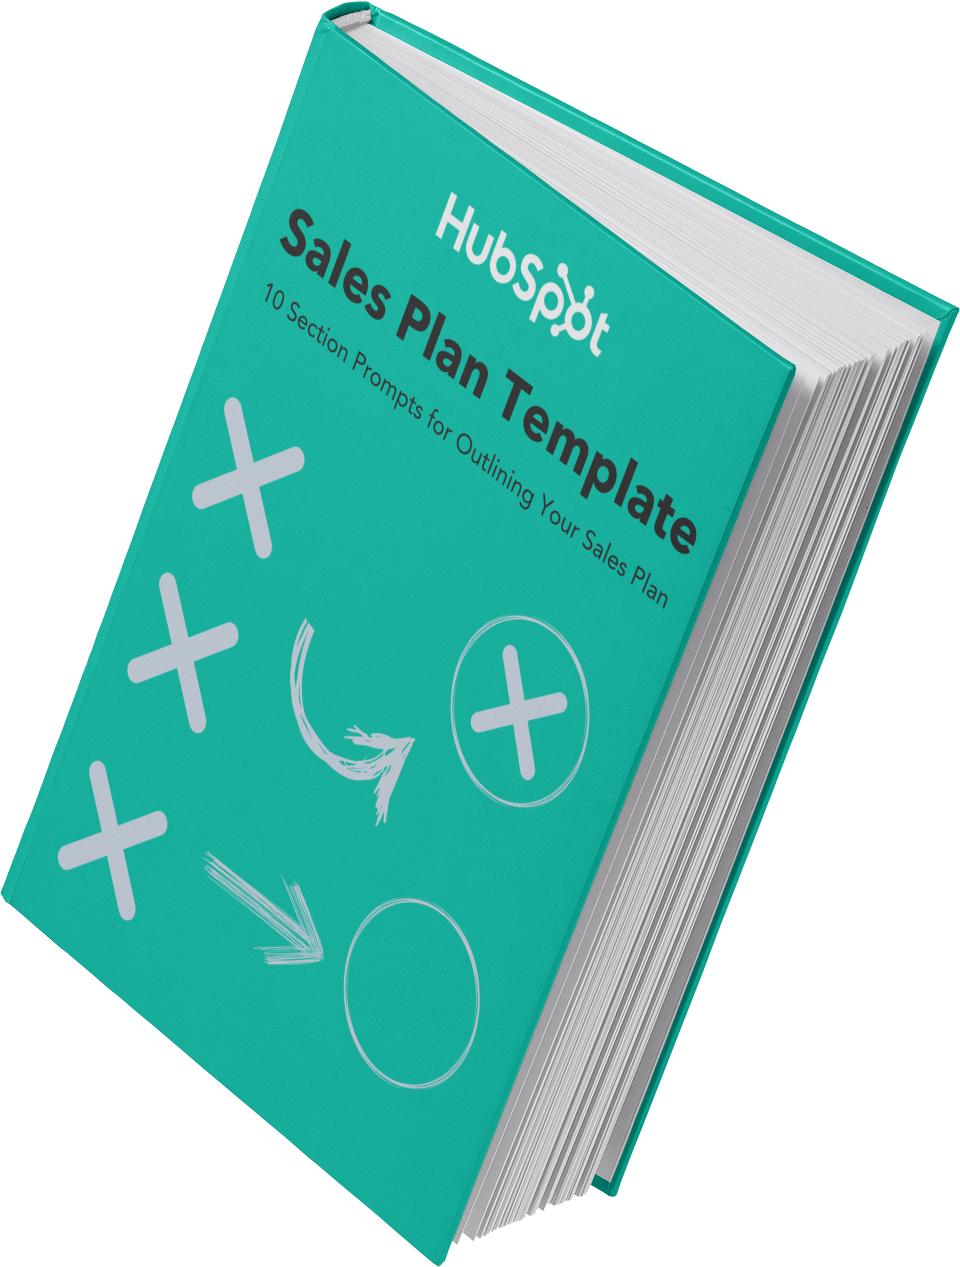 Free Sales Plan Template Hubspot 6820